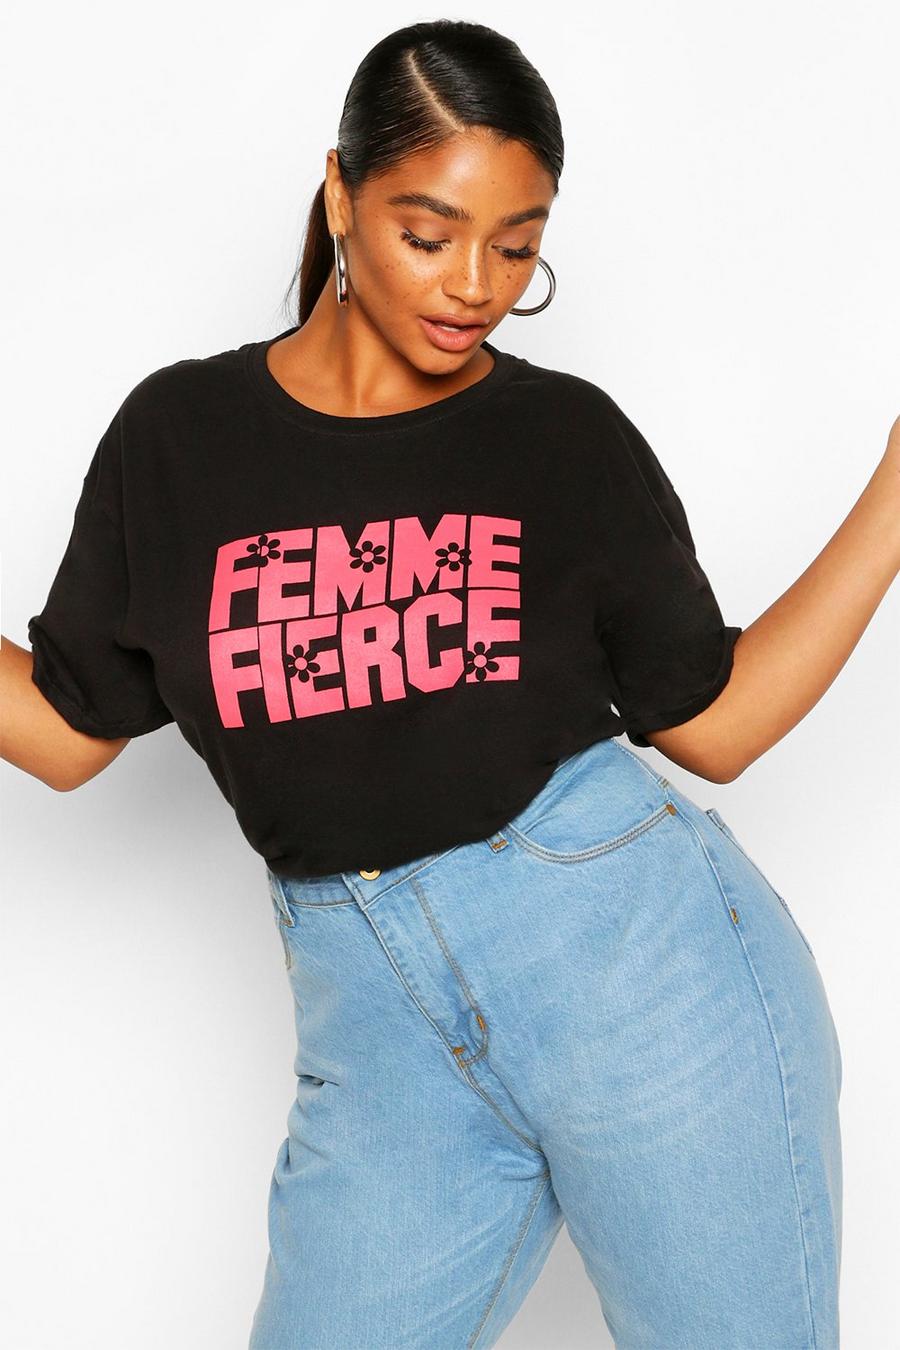 Plus Femme Fierce Slogan T-shirt image number 1